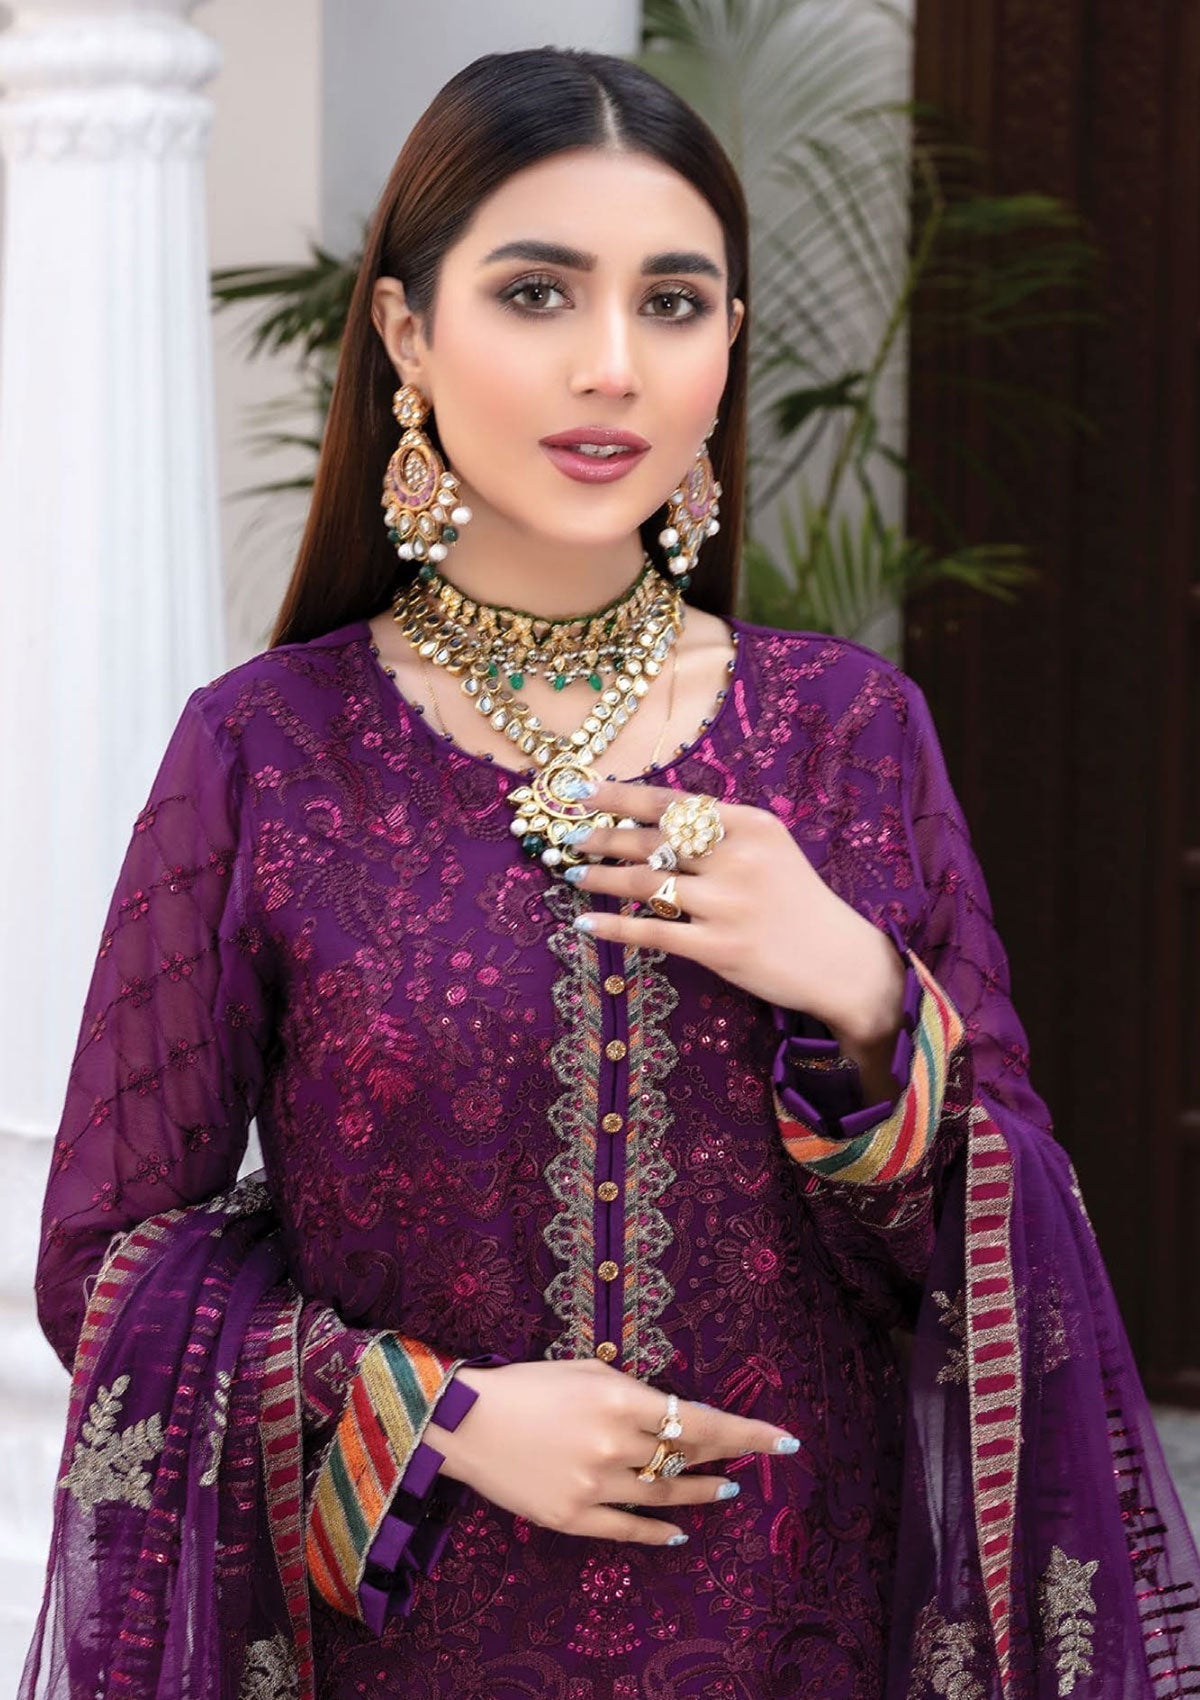 Formal Dress - Mah'e Rooh - Maribel - MM#808 available at Saleem Fabrics Traditions